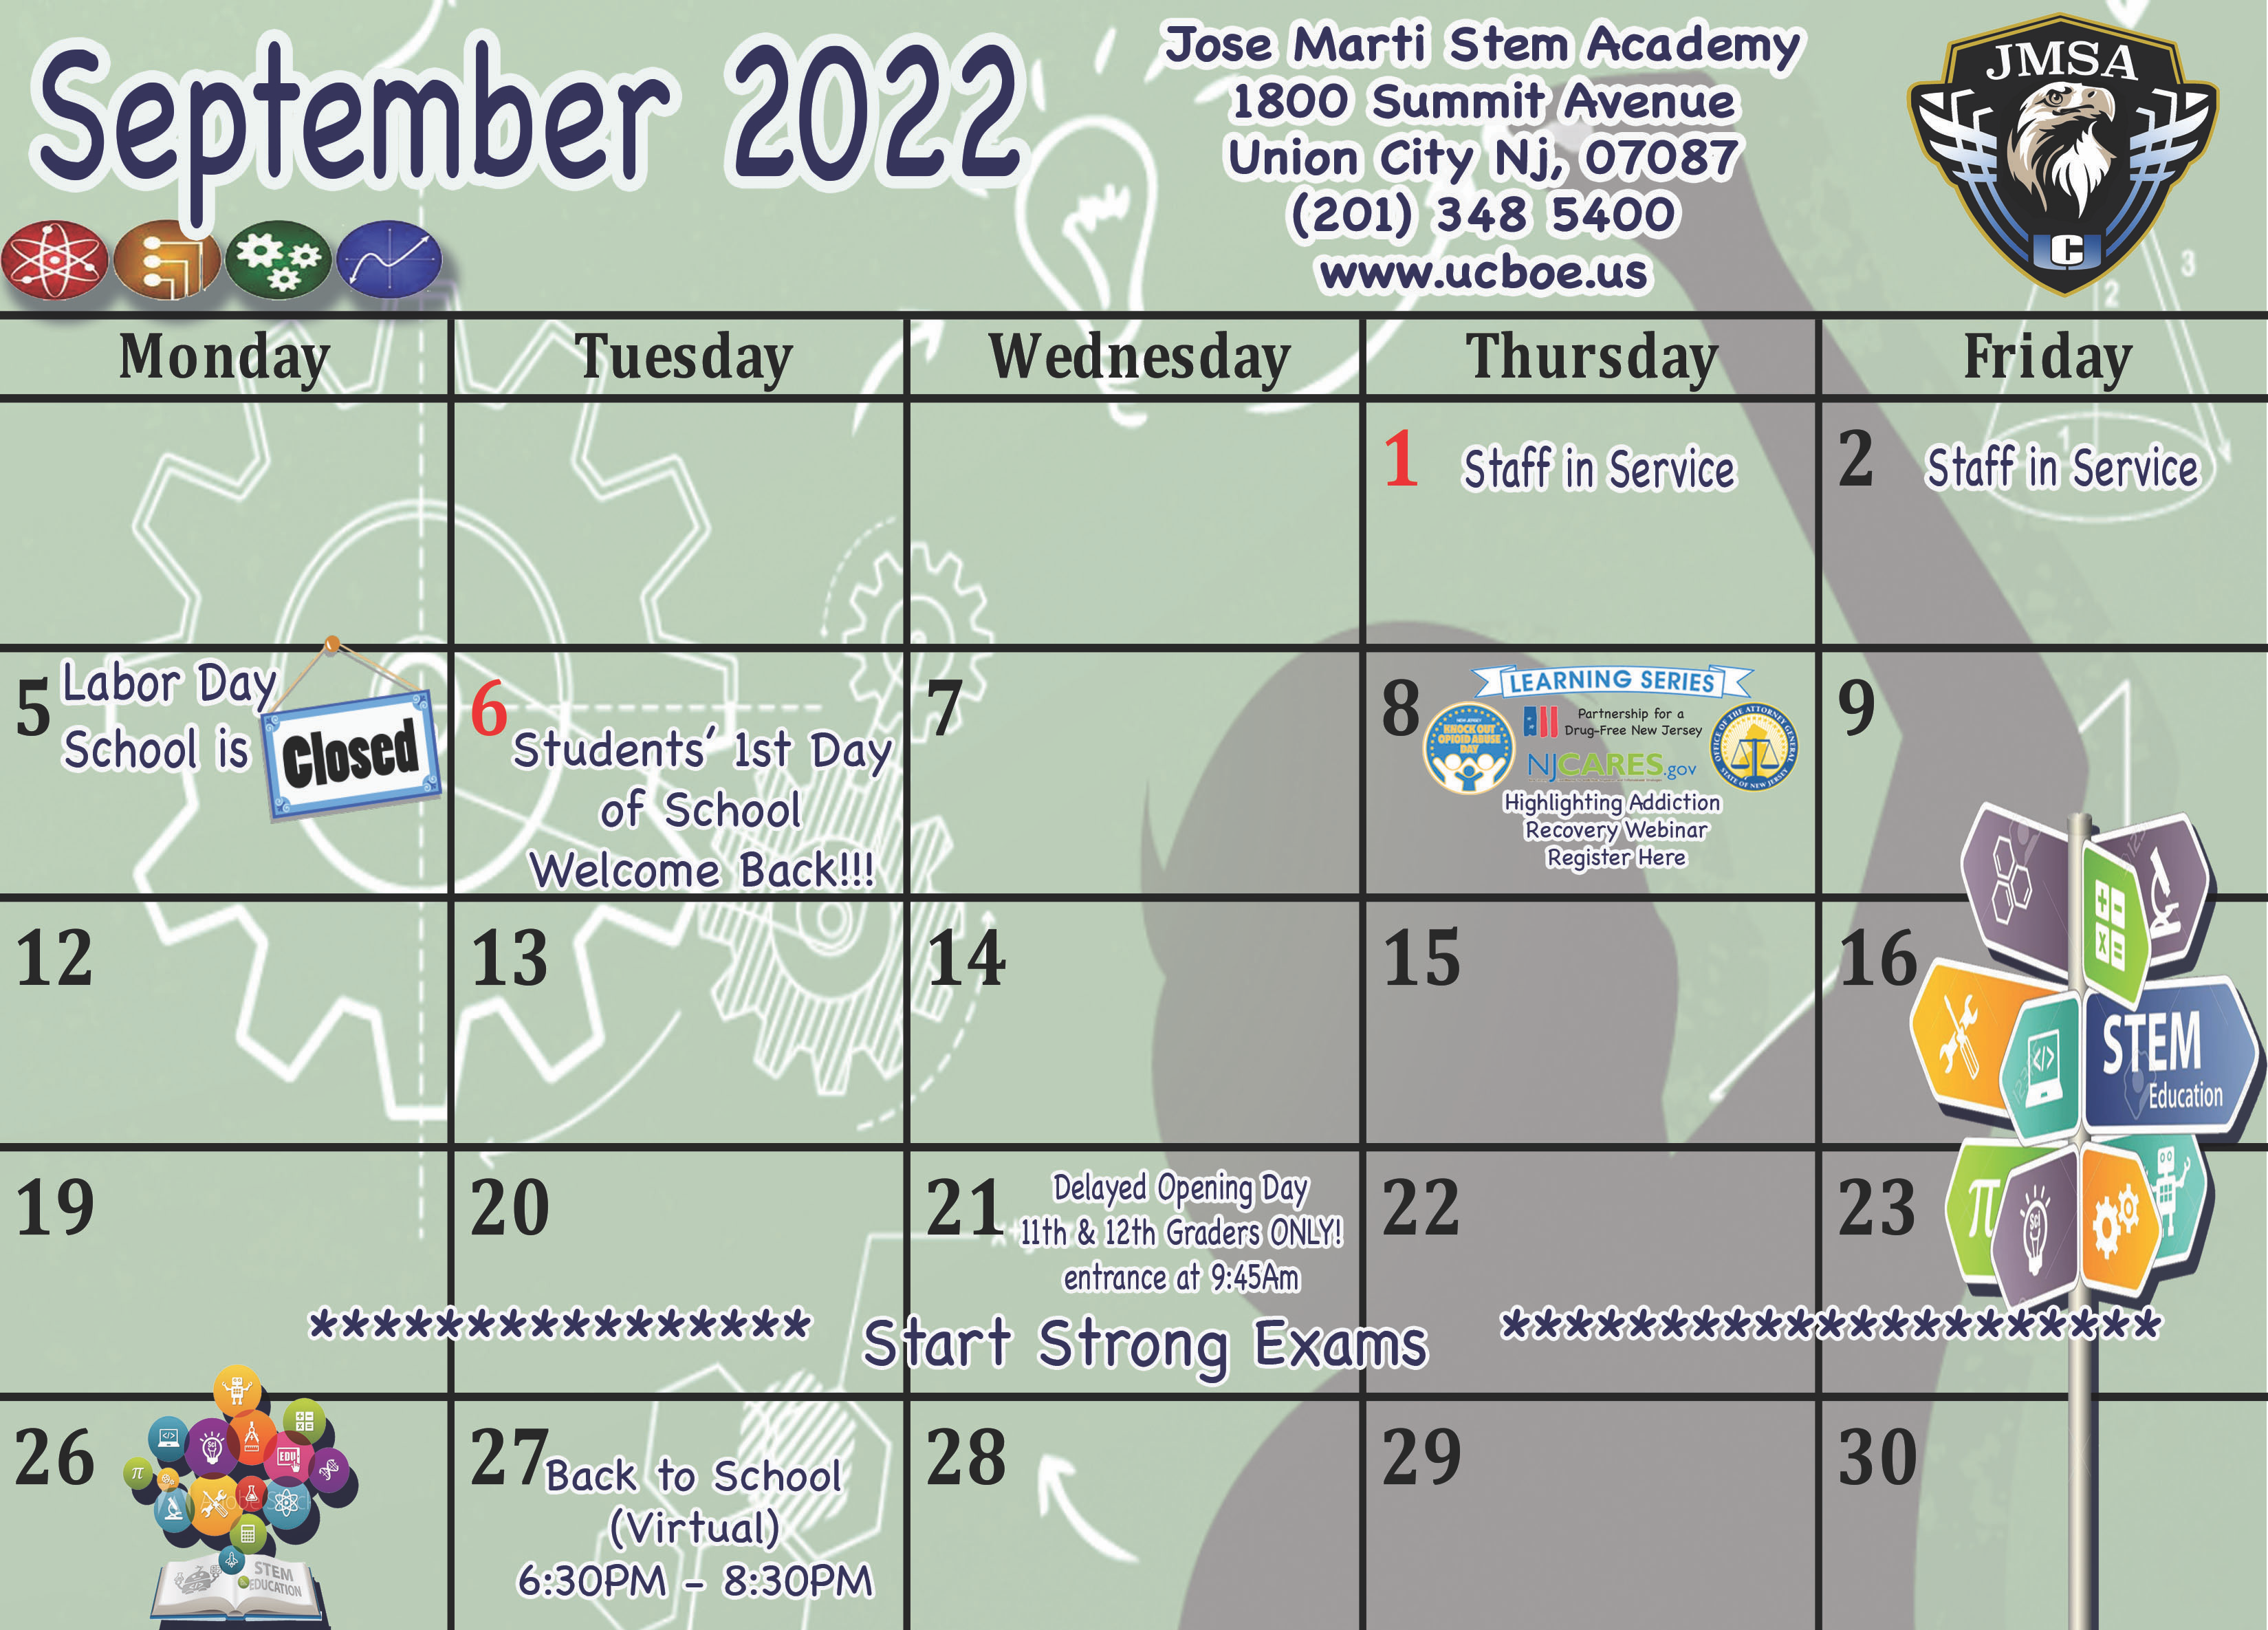 Jose Martí September 2022 Calendar